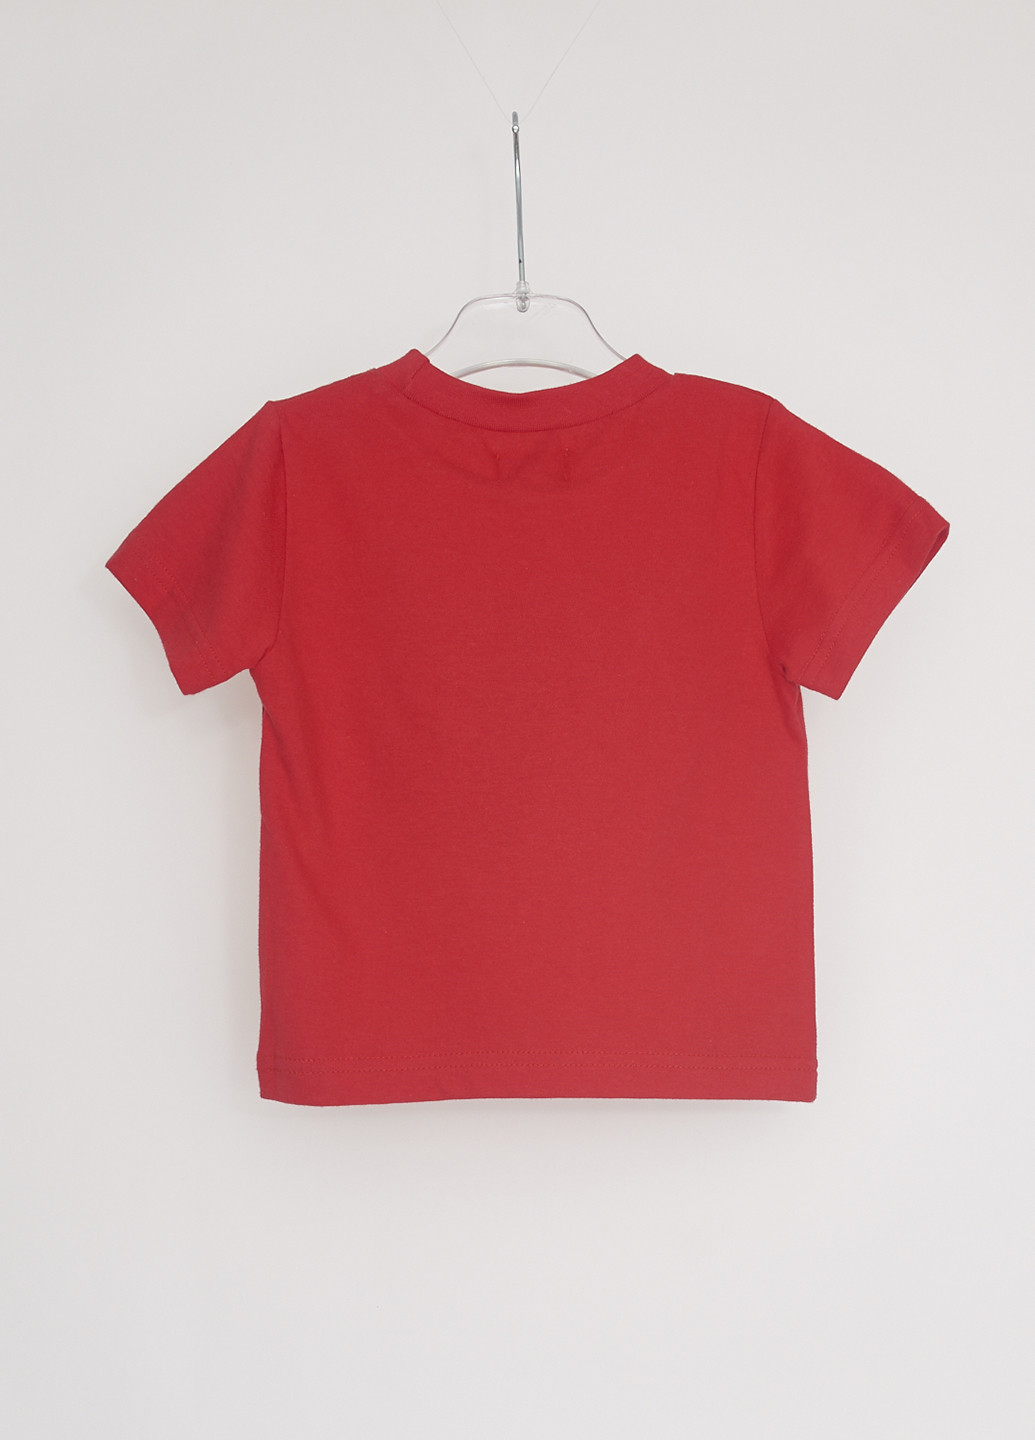 Красная летняя футболка Mandarino